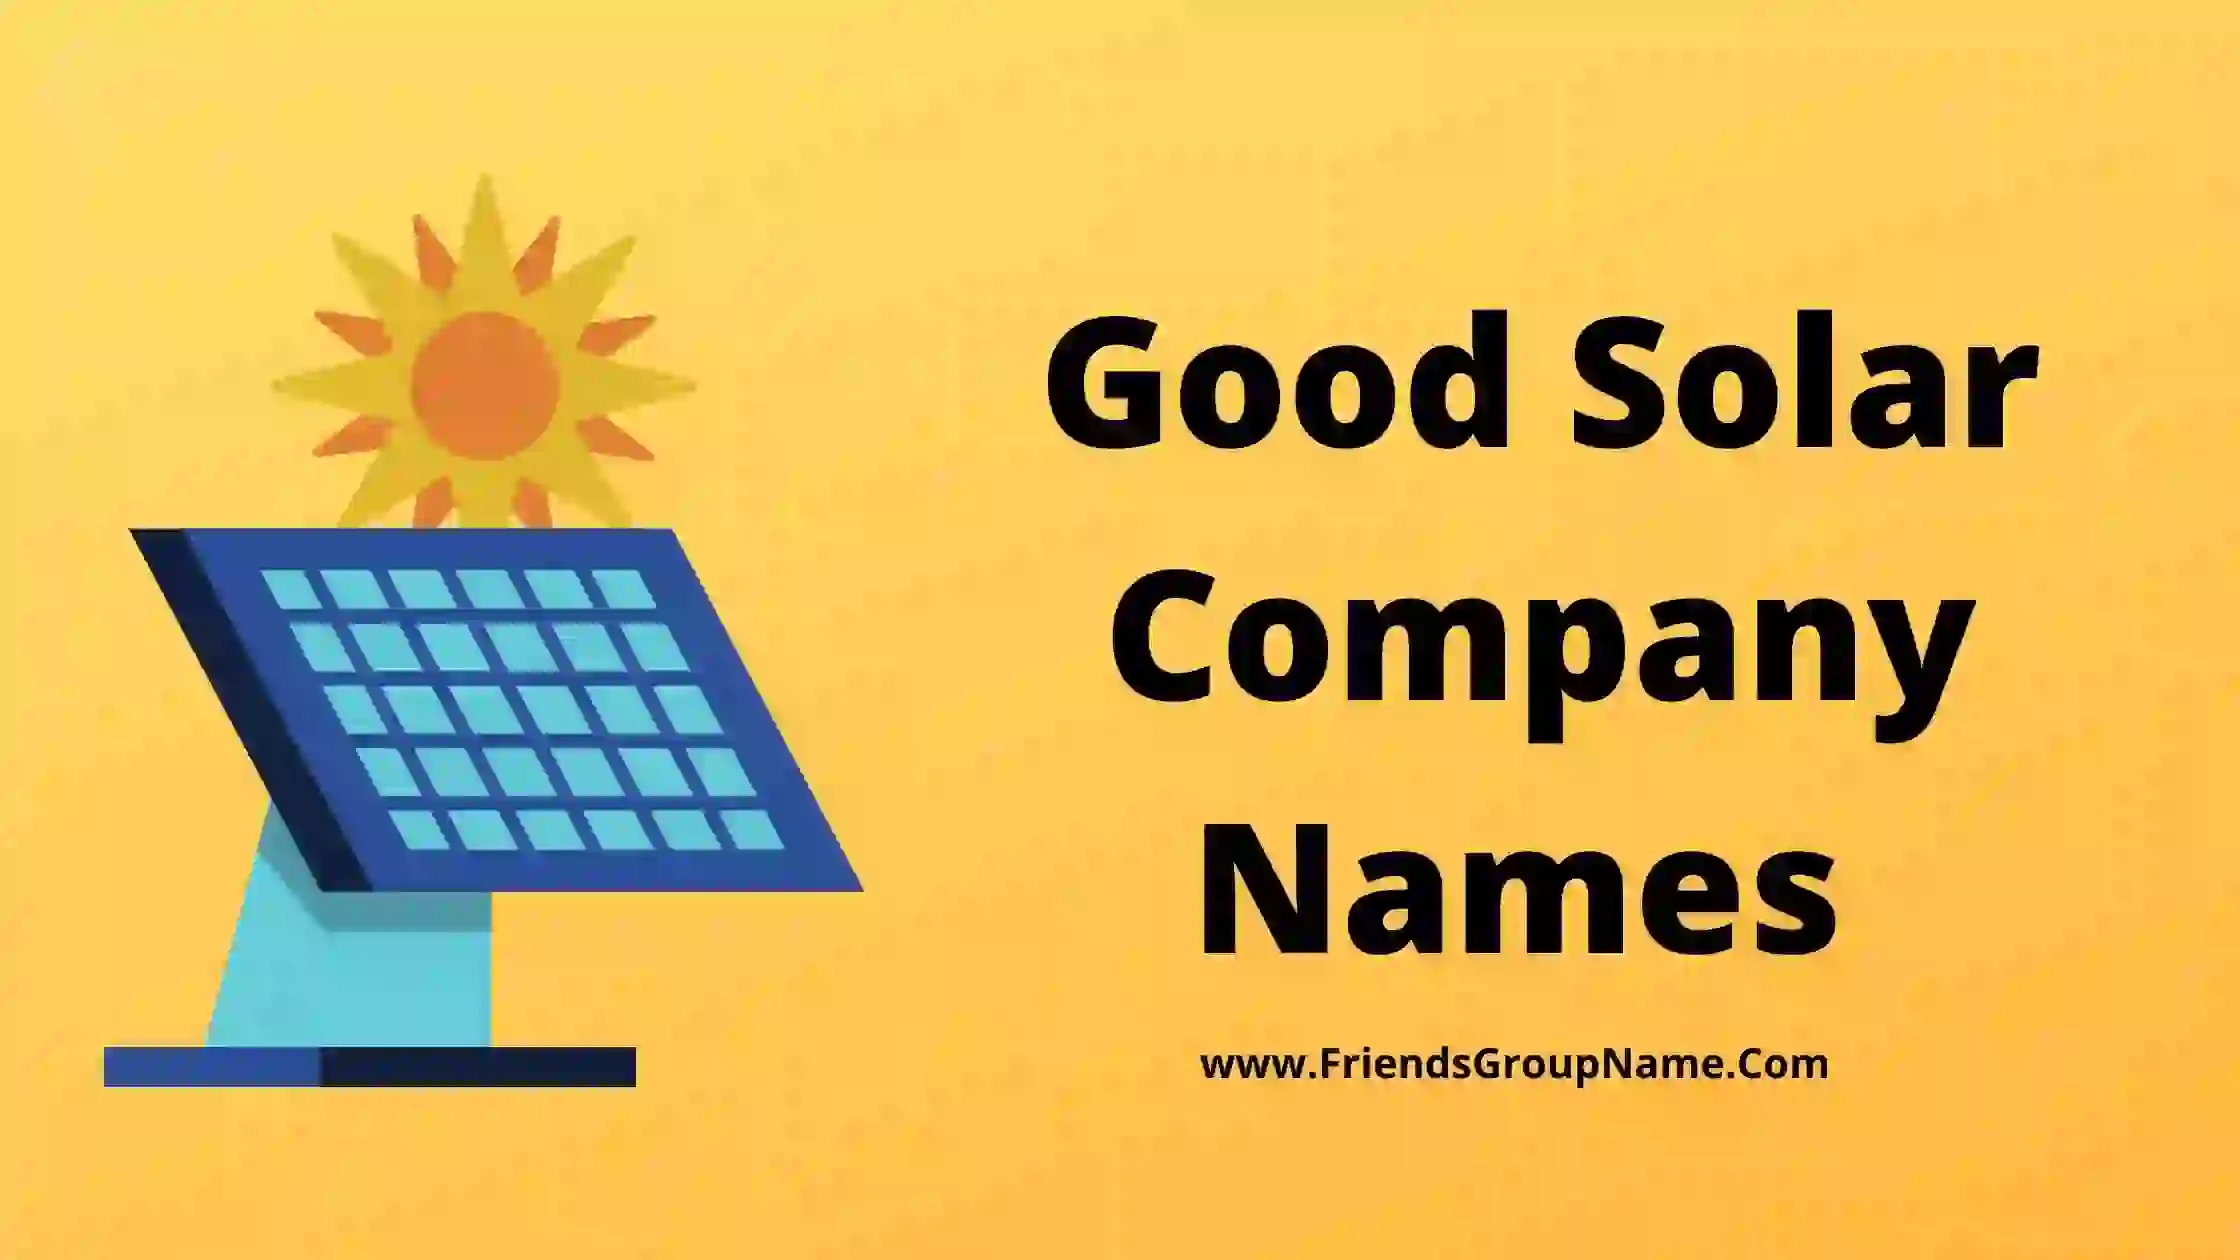 Good Solar Company Names